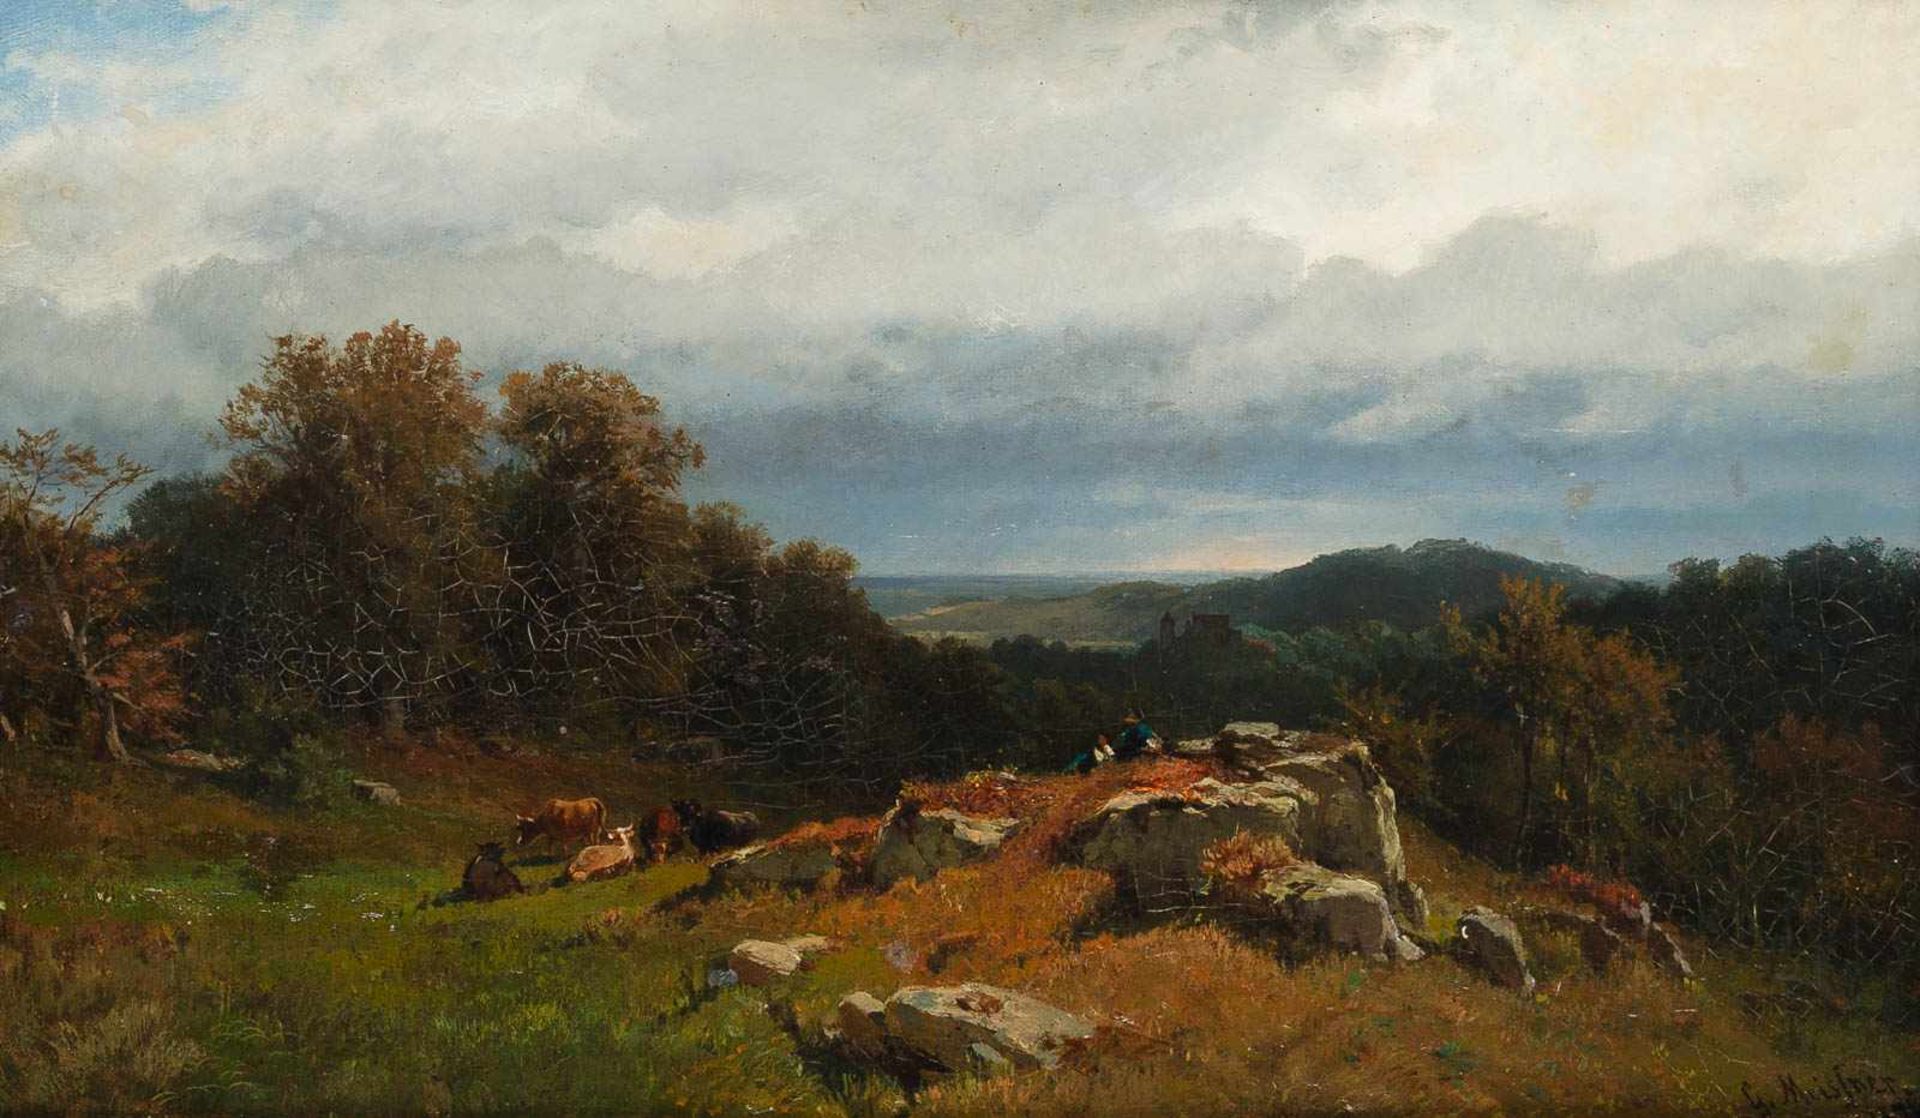 GEMÄLDEKuhhirten mit Herde in bewaldeter Gebirgslandschaft Öl auf Leinwand. 29 x 47 cm. Unten rechts